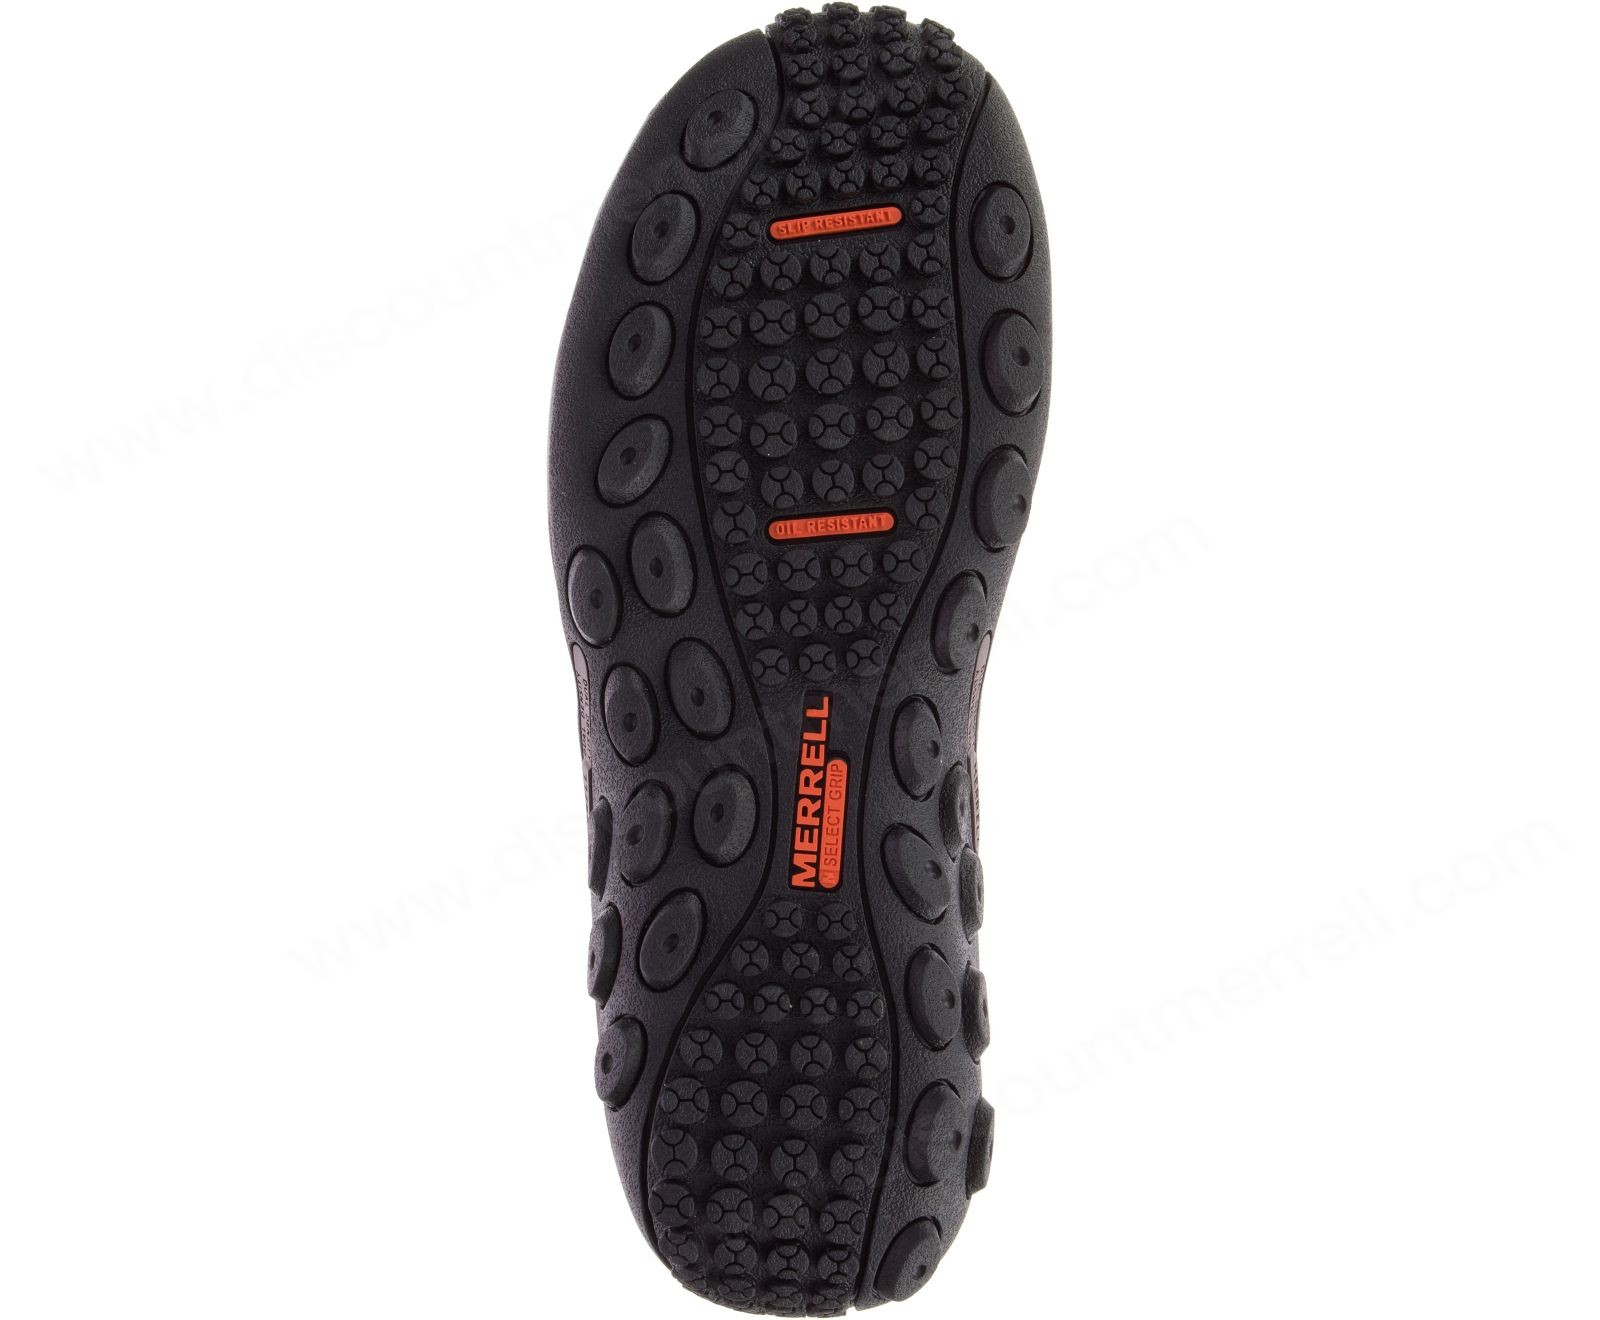 Merrell - Women's Jungle Moc Leather Comp Toe Work Shoe - Merrell - Women's Jungle Moc Leather Comp Toe Work Shoe